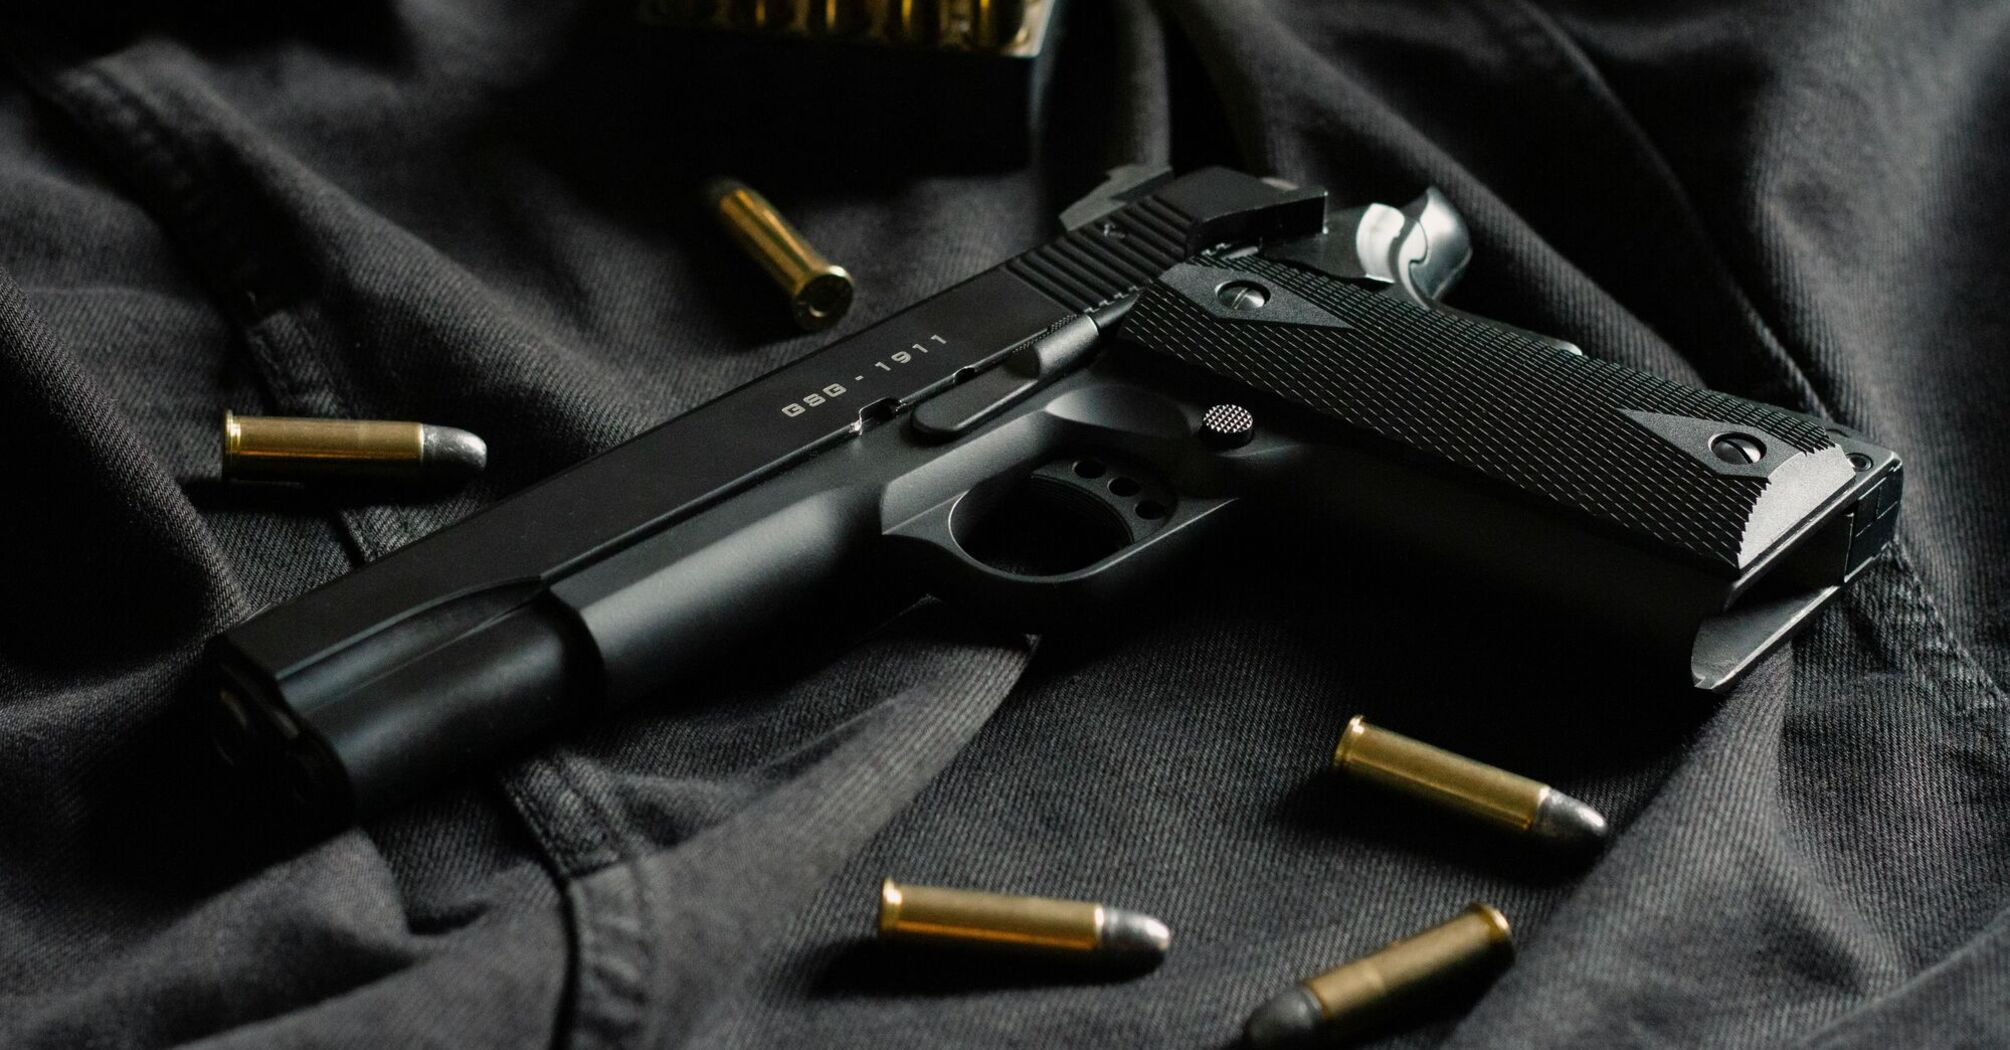 Black semi automatic pistol on black textile